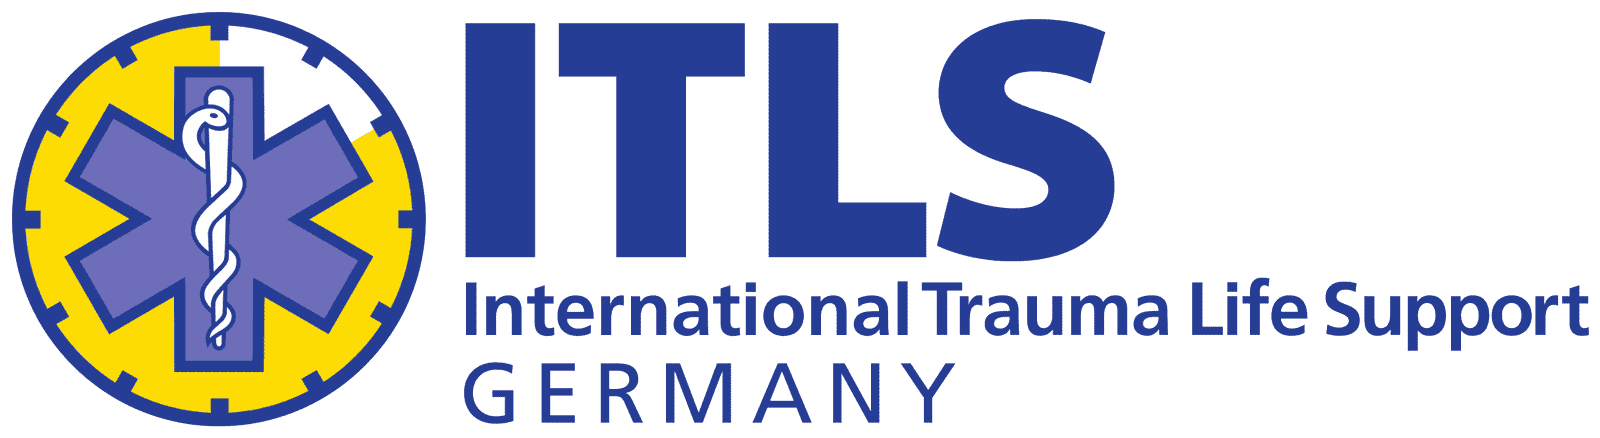 ITLS Germany e.V.